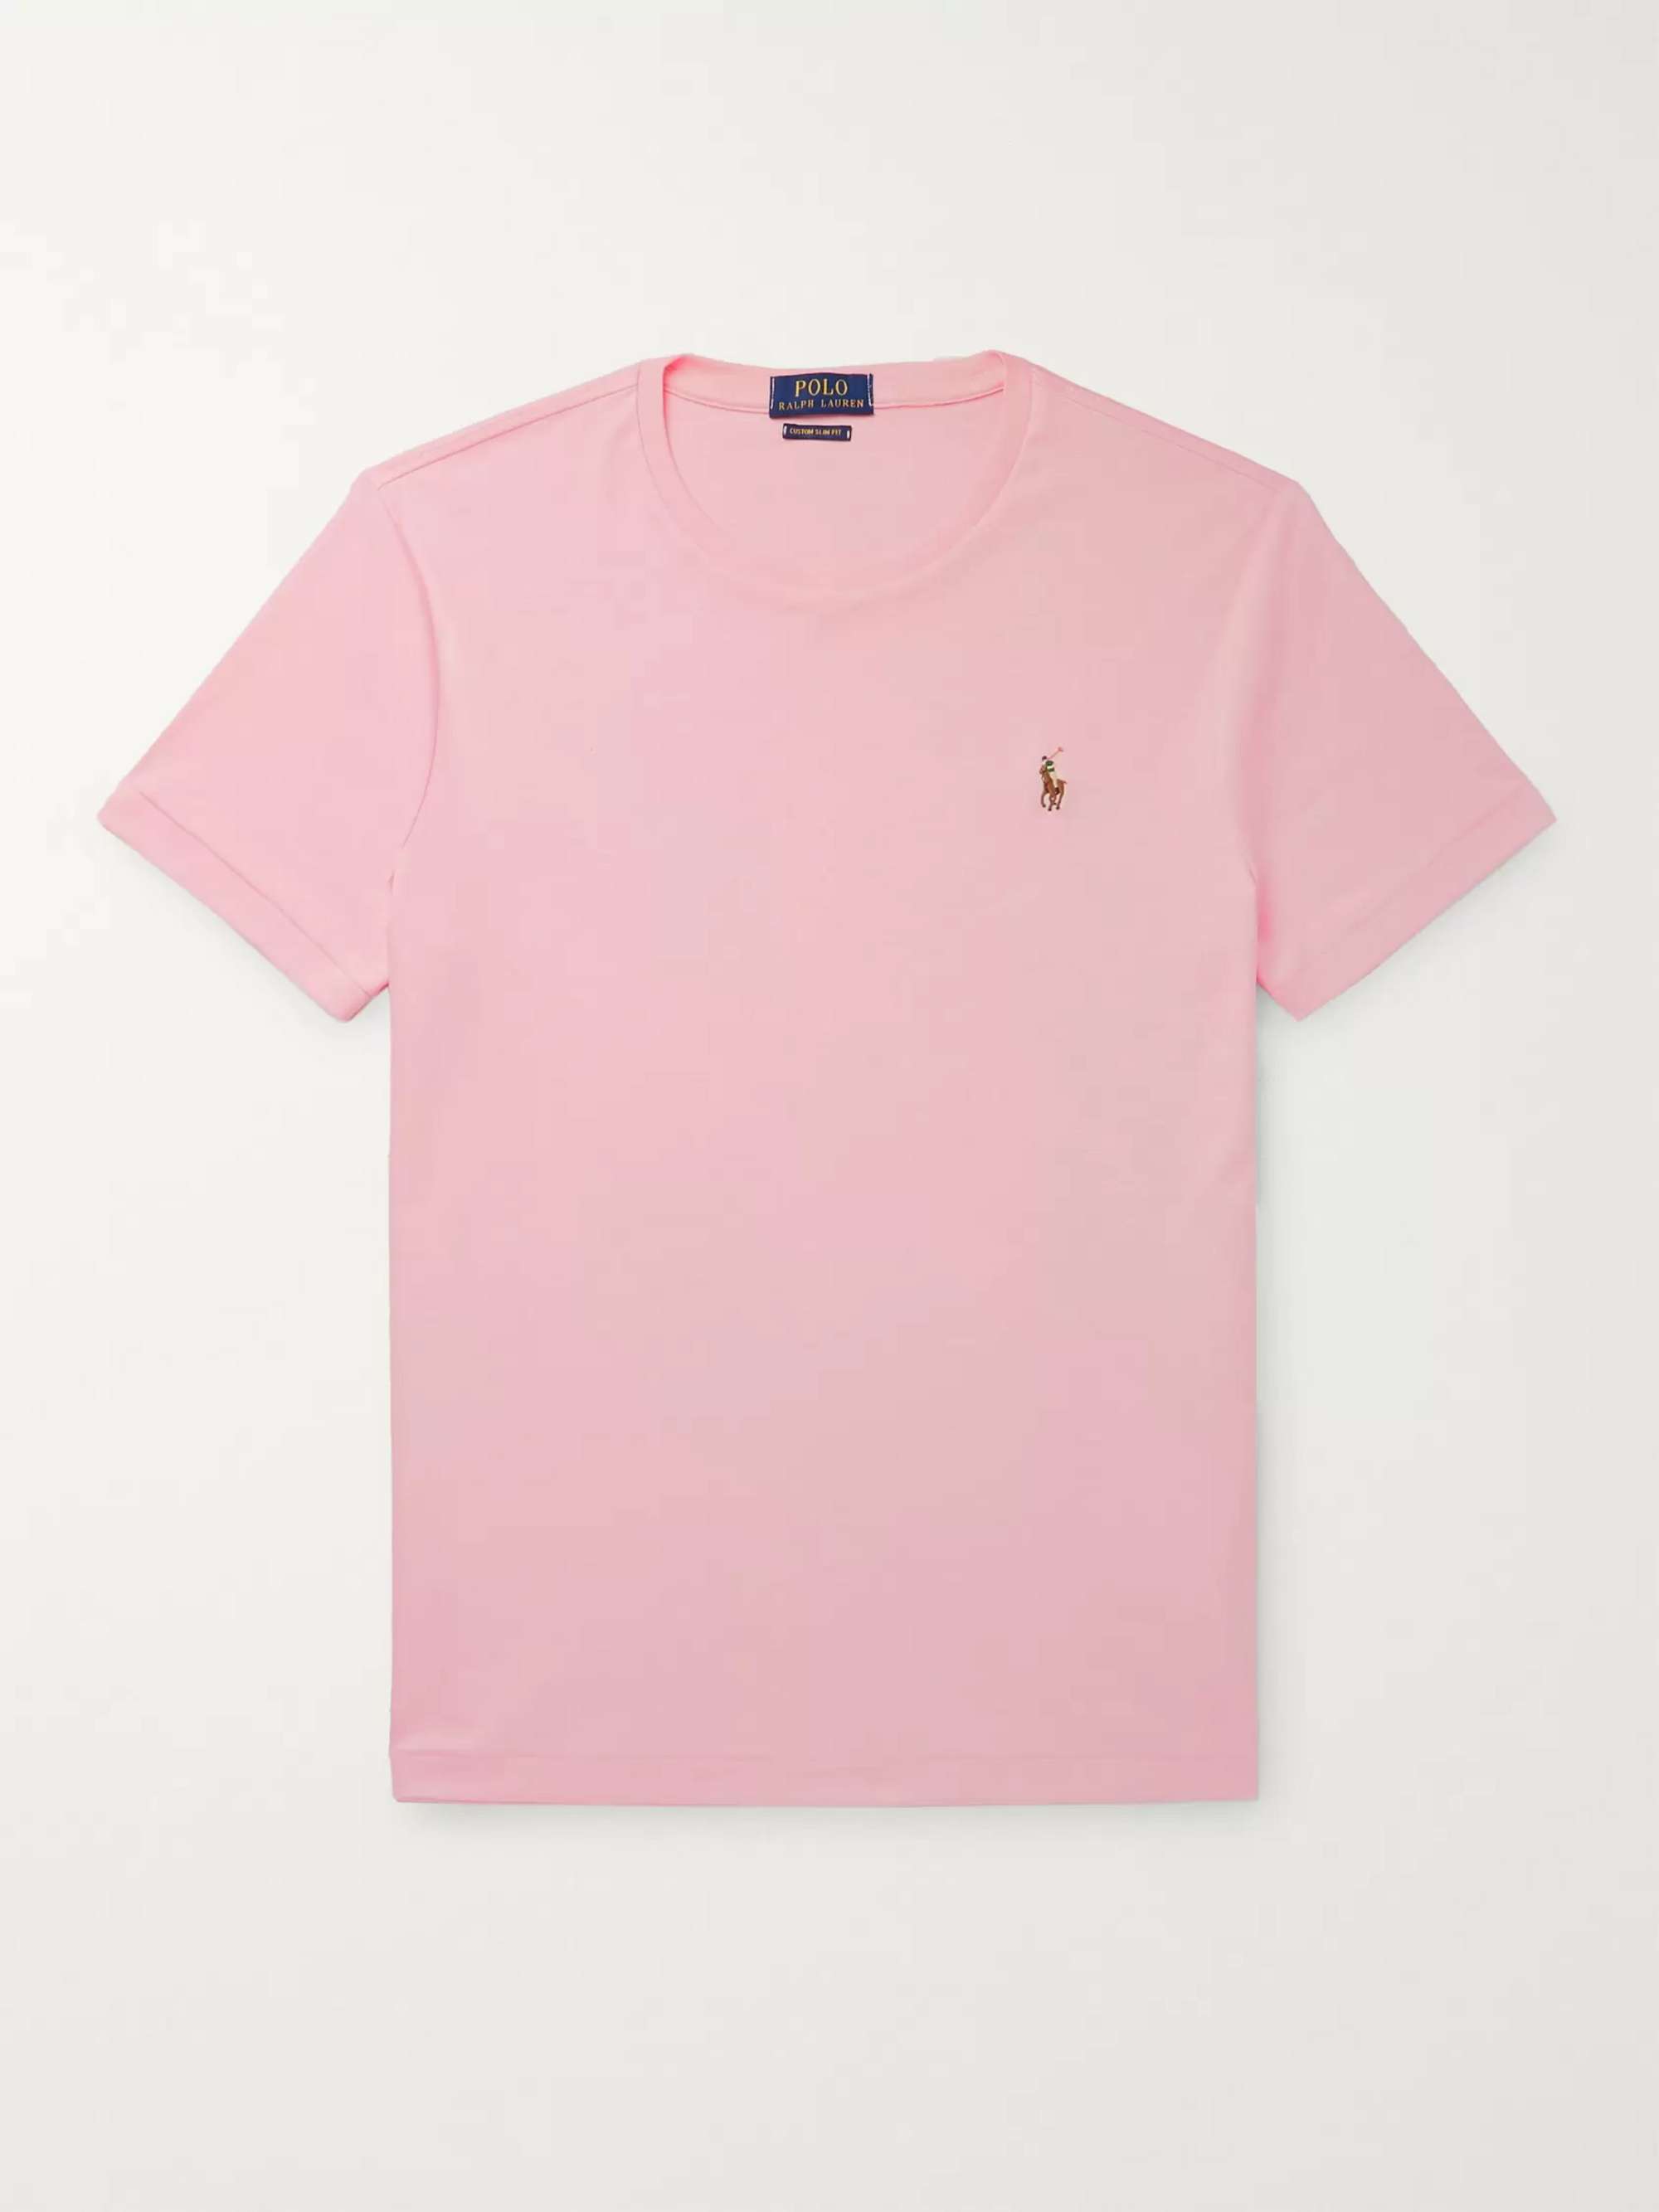 POLO RALPH LAUREN Slim-Fit Pima Cotton-Jersey T-Shirt